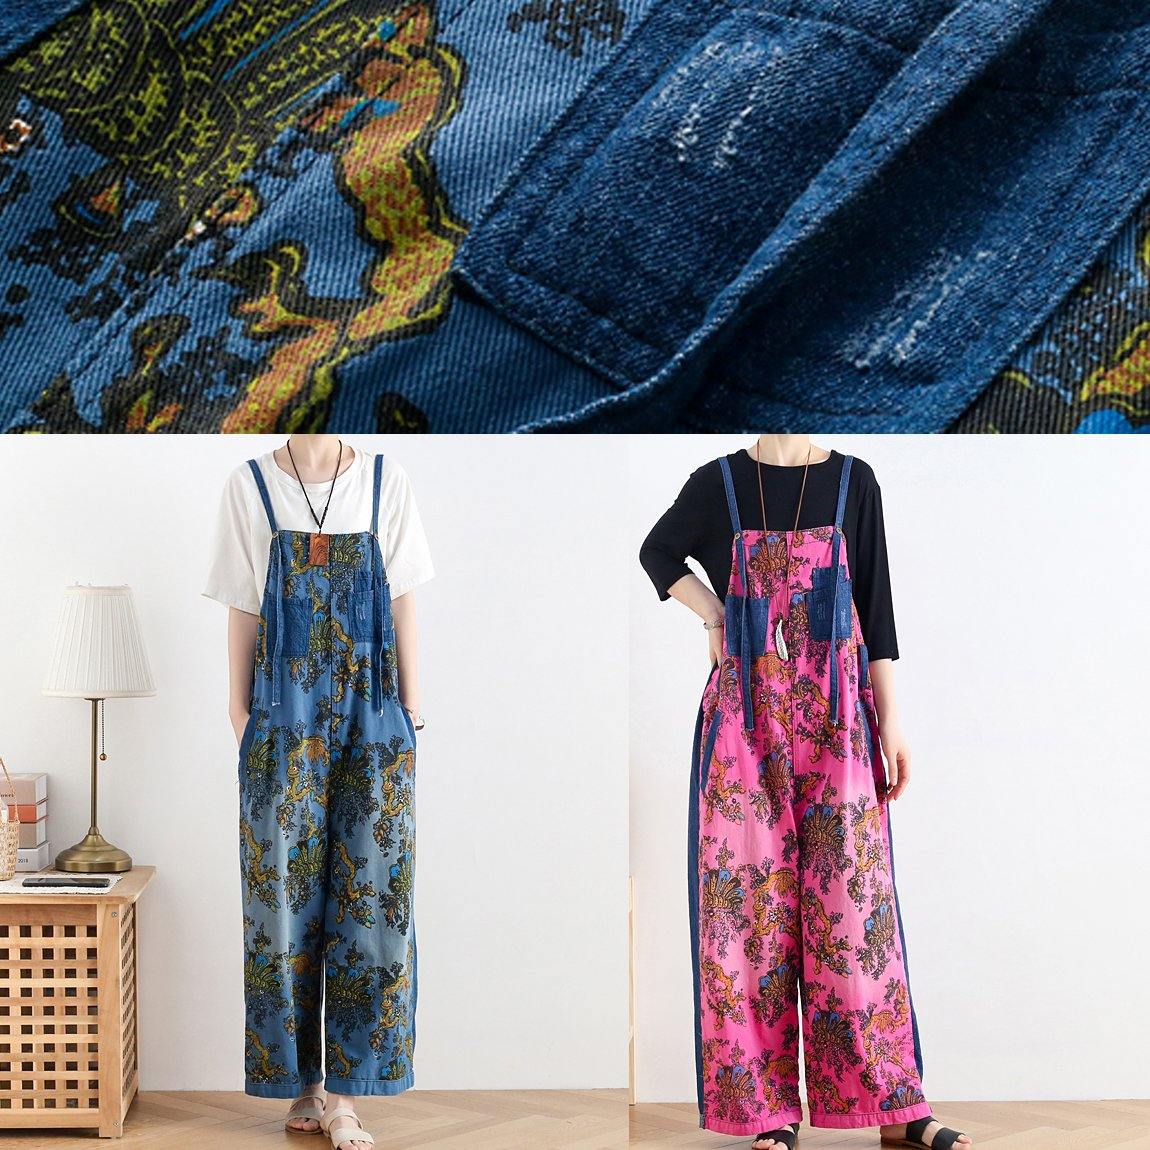 Spring original literary fashion retro ethnic style blue printed loose denim overalls